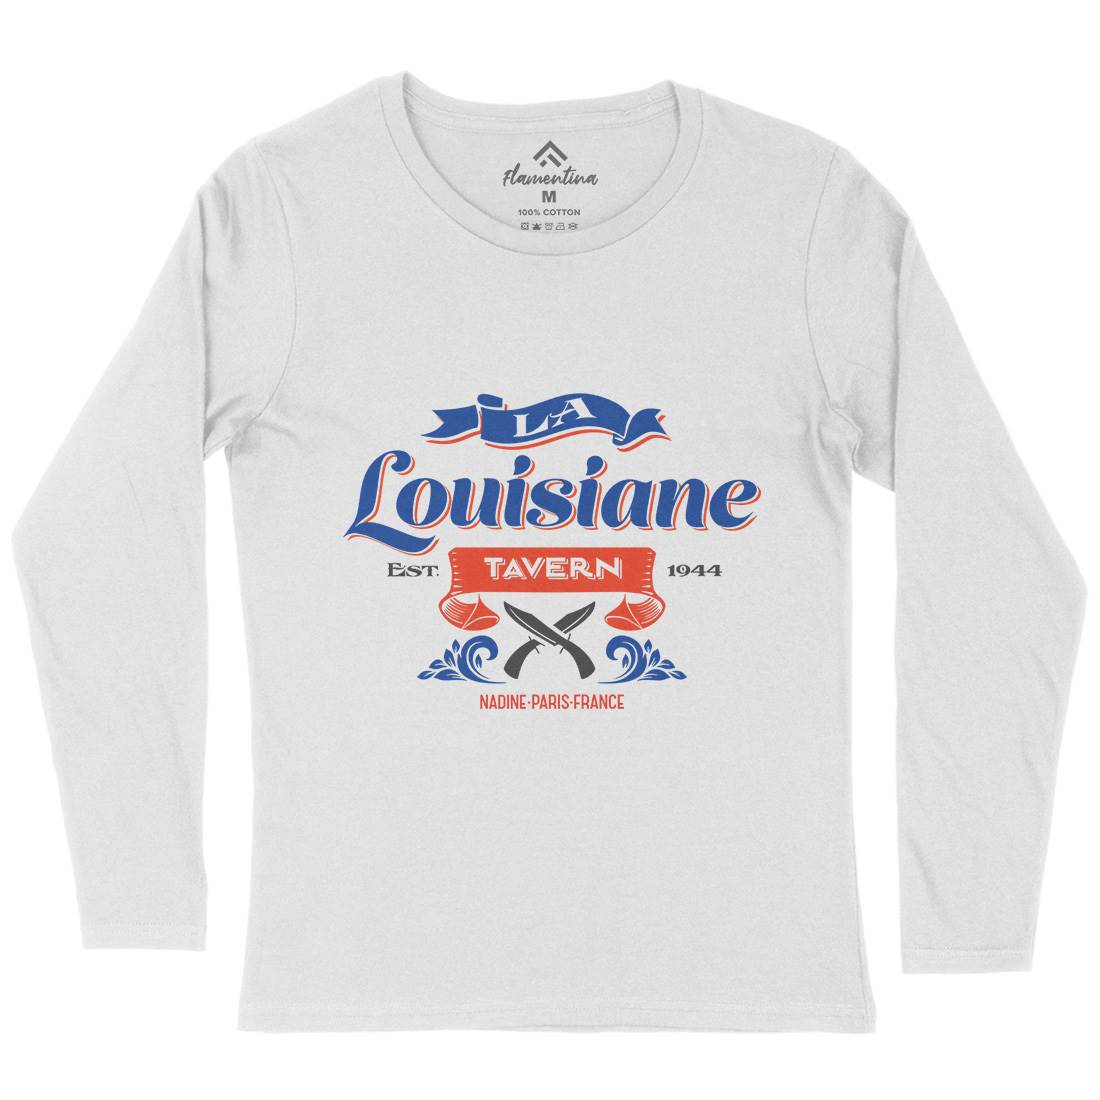 La Louisiane Tavern Womens Long Sleeve T-Shirt Food D317